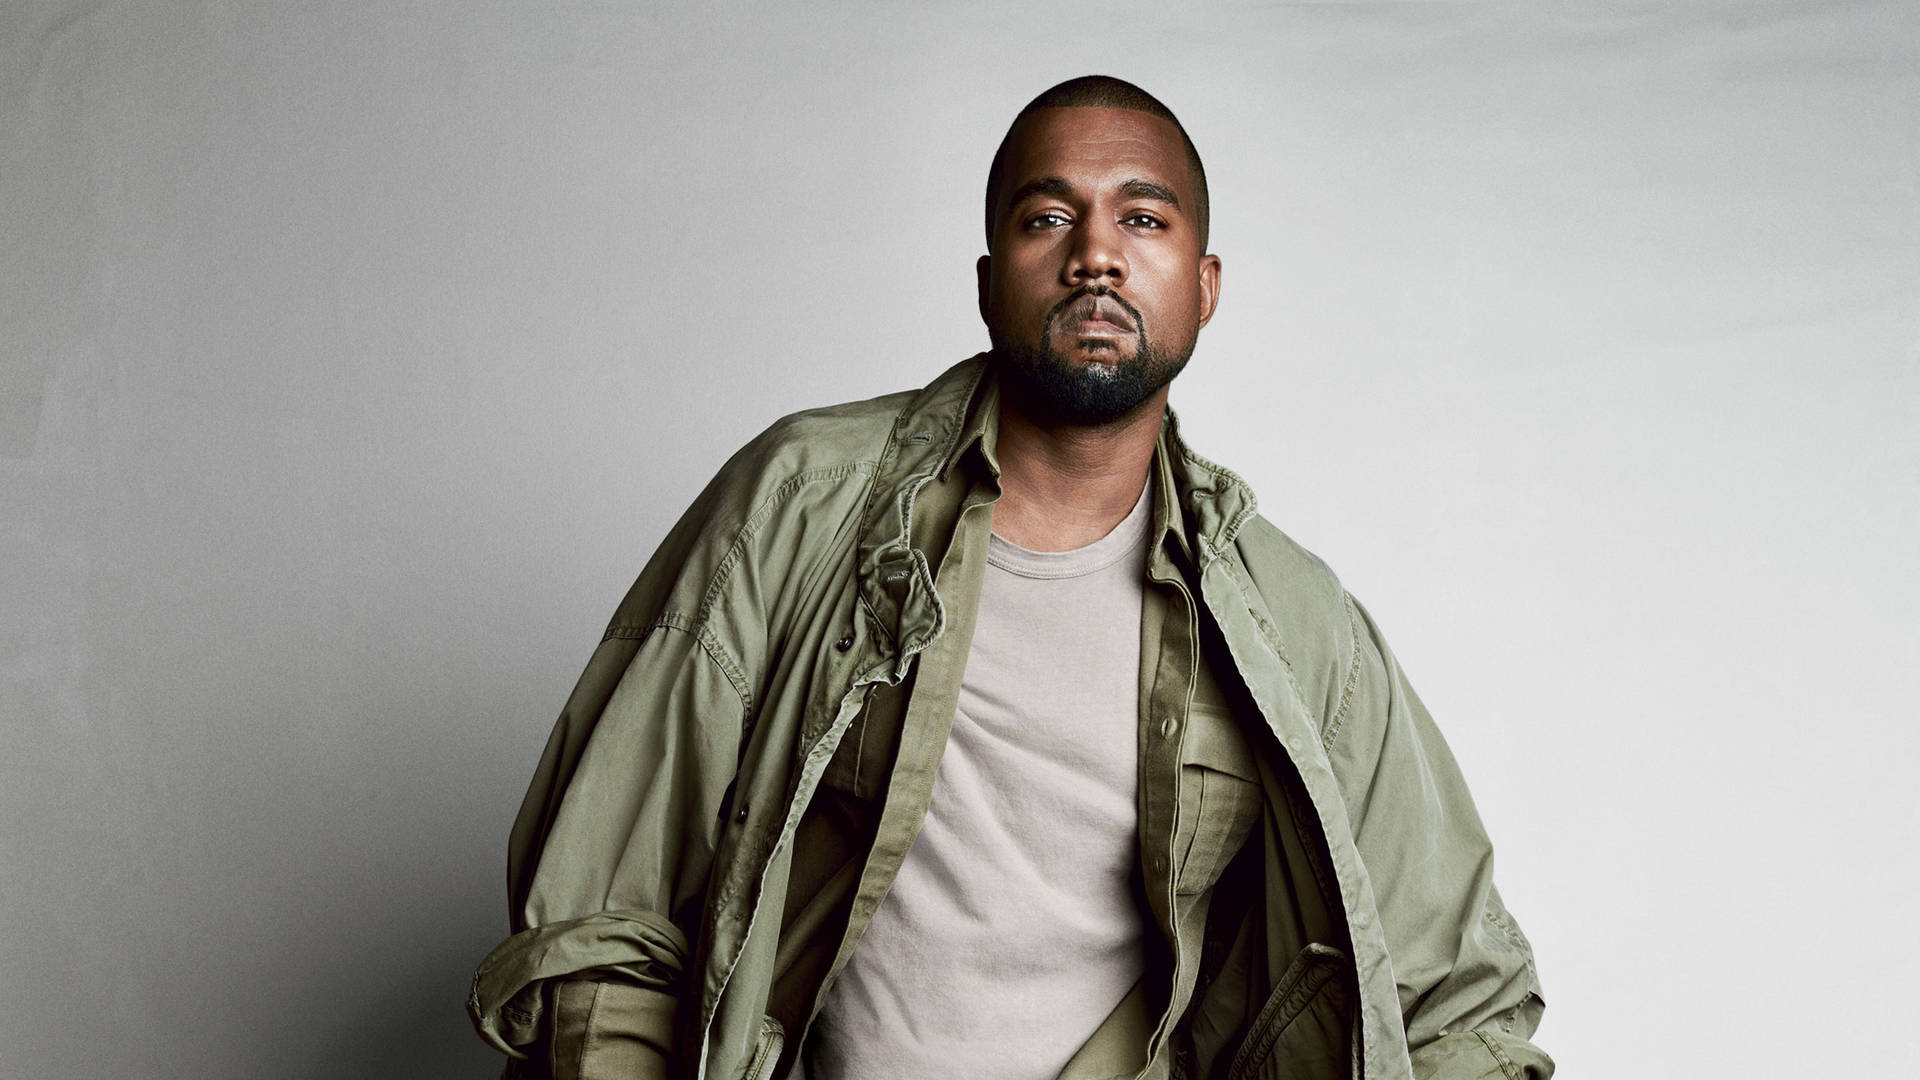 Kanye West Olive Green Jacket Background